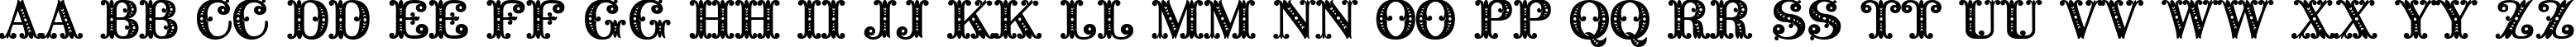 Пример написания английского алфавита шрифтом Barocco Initial